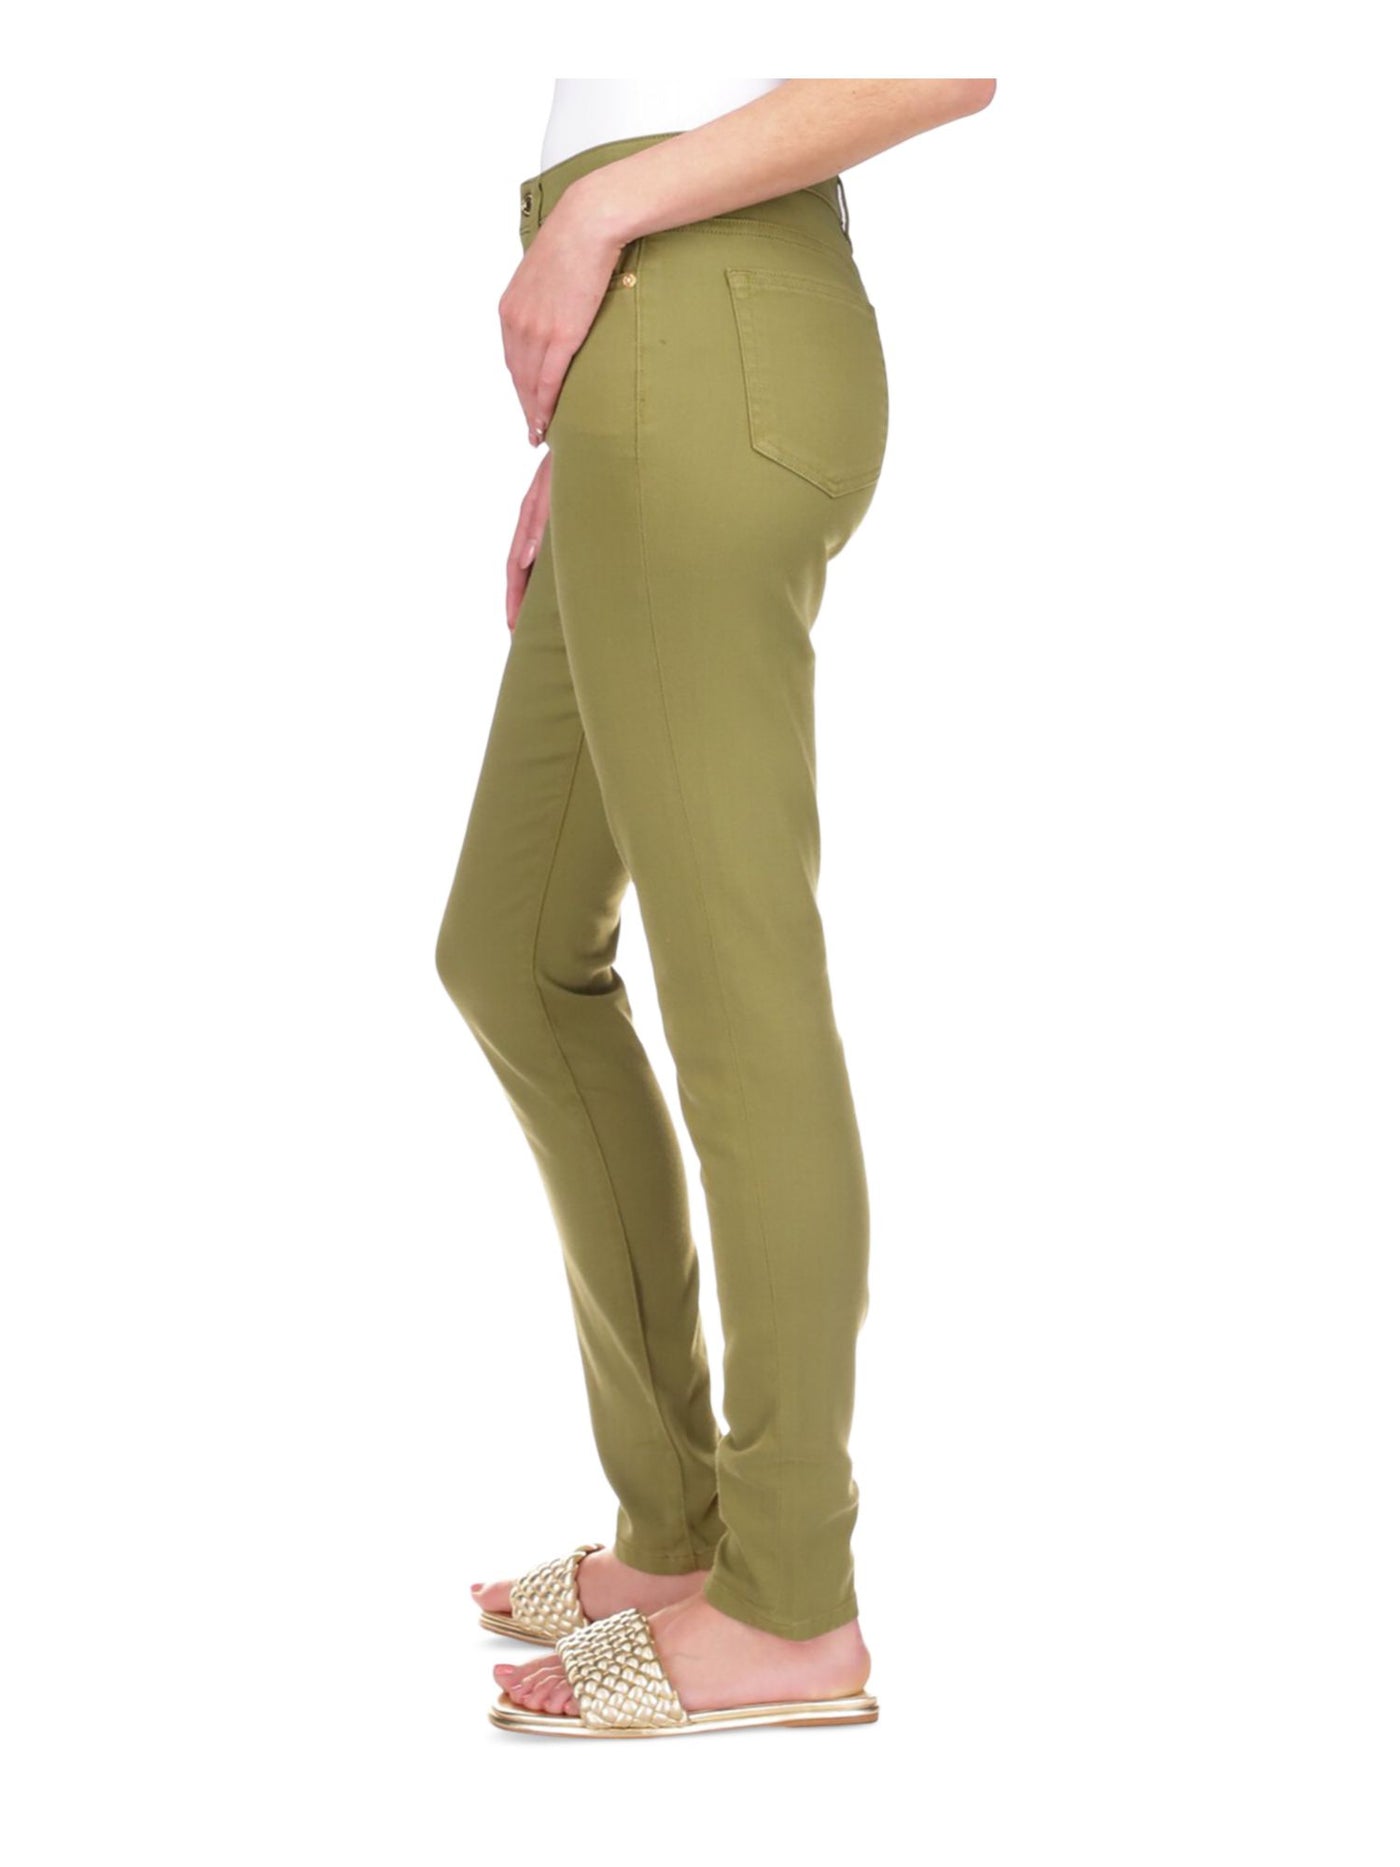 MICHAEL KORS Womens Green Zippered Pocketed Skinny Leg High Waist Jeans Petites 2P